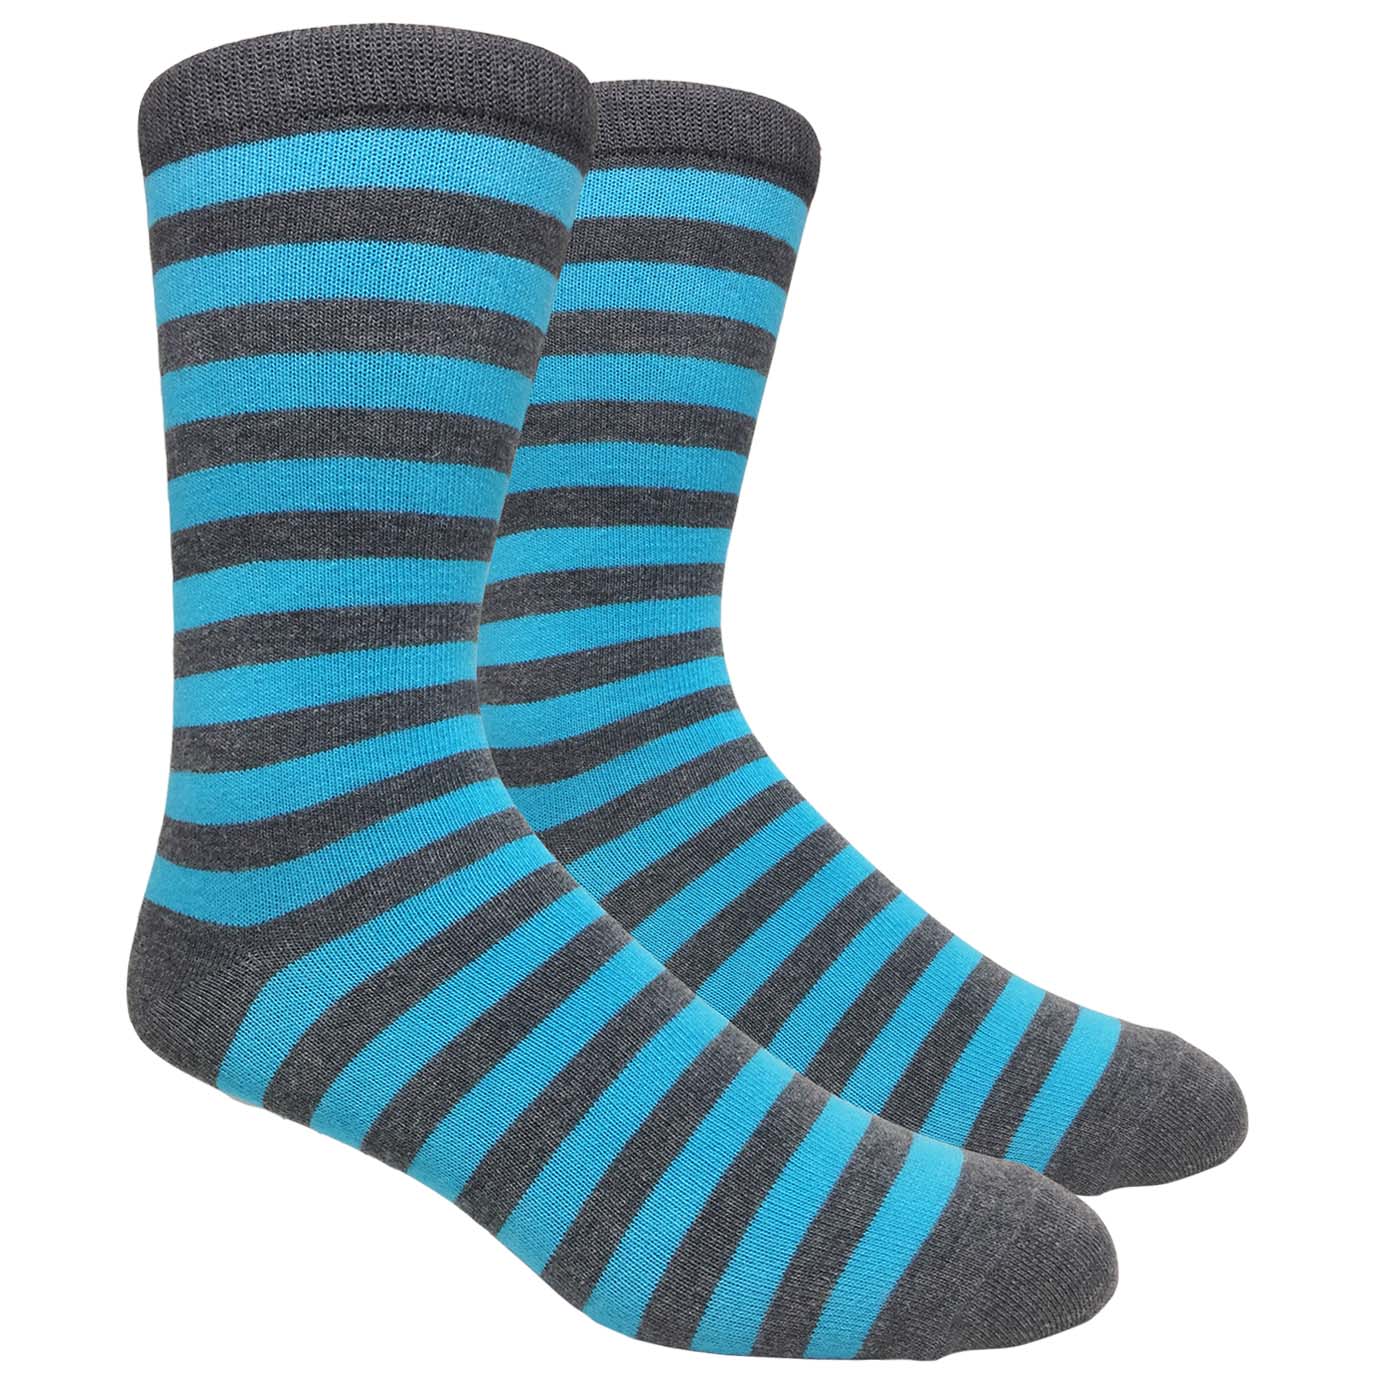 FineFit Black Label Stripe Socks - Charcoal Grey & Blue